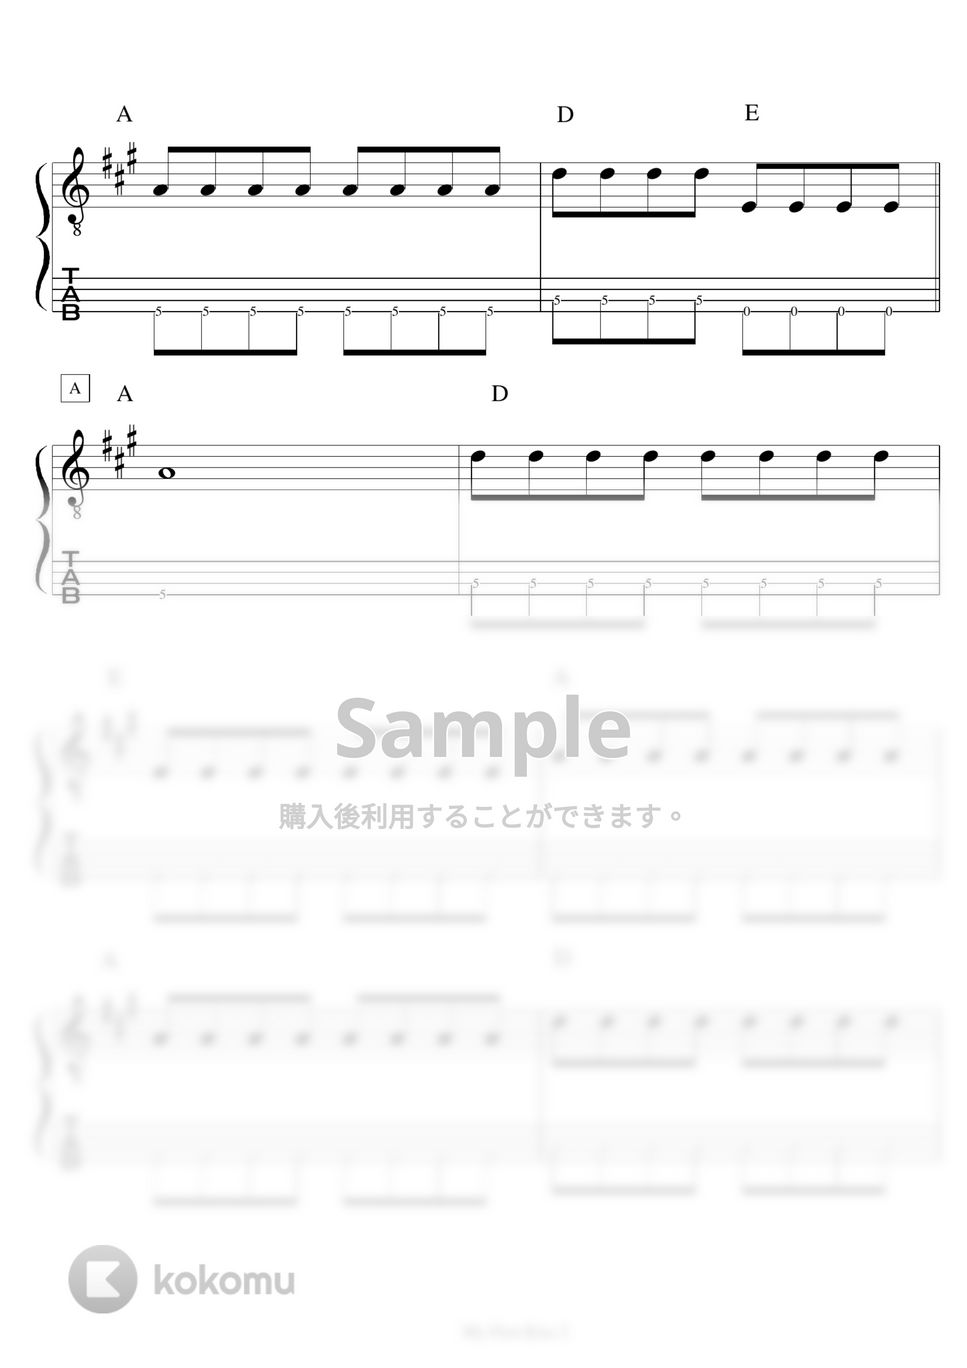 Hi-STANDARD - My First Kiss ベースTAB 演奏動画あり by バイトーン音楽教室